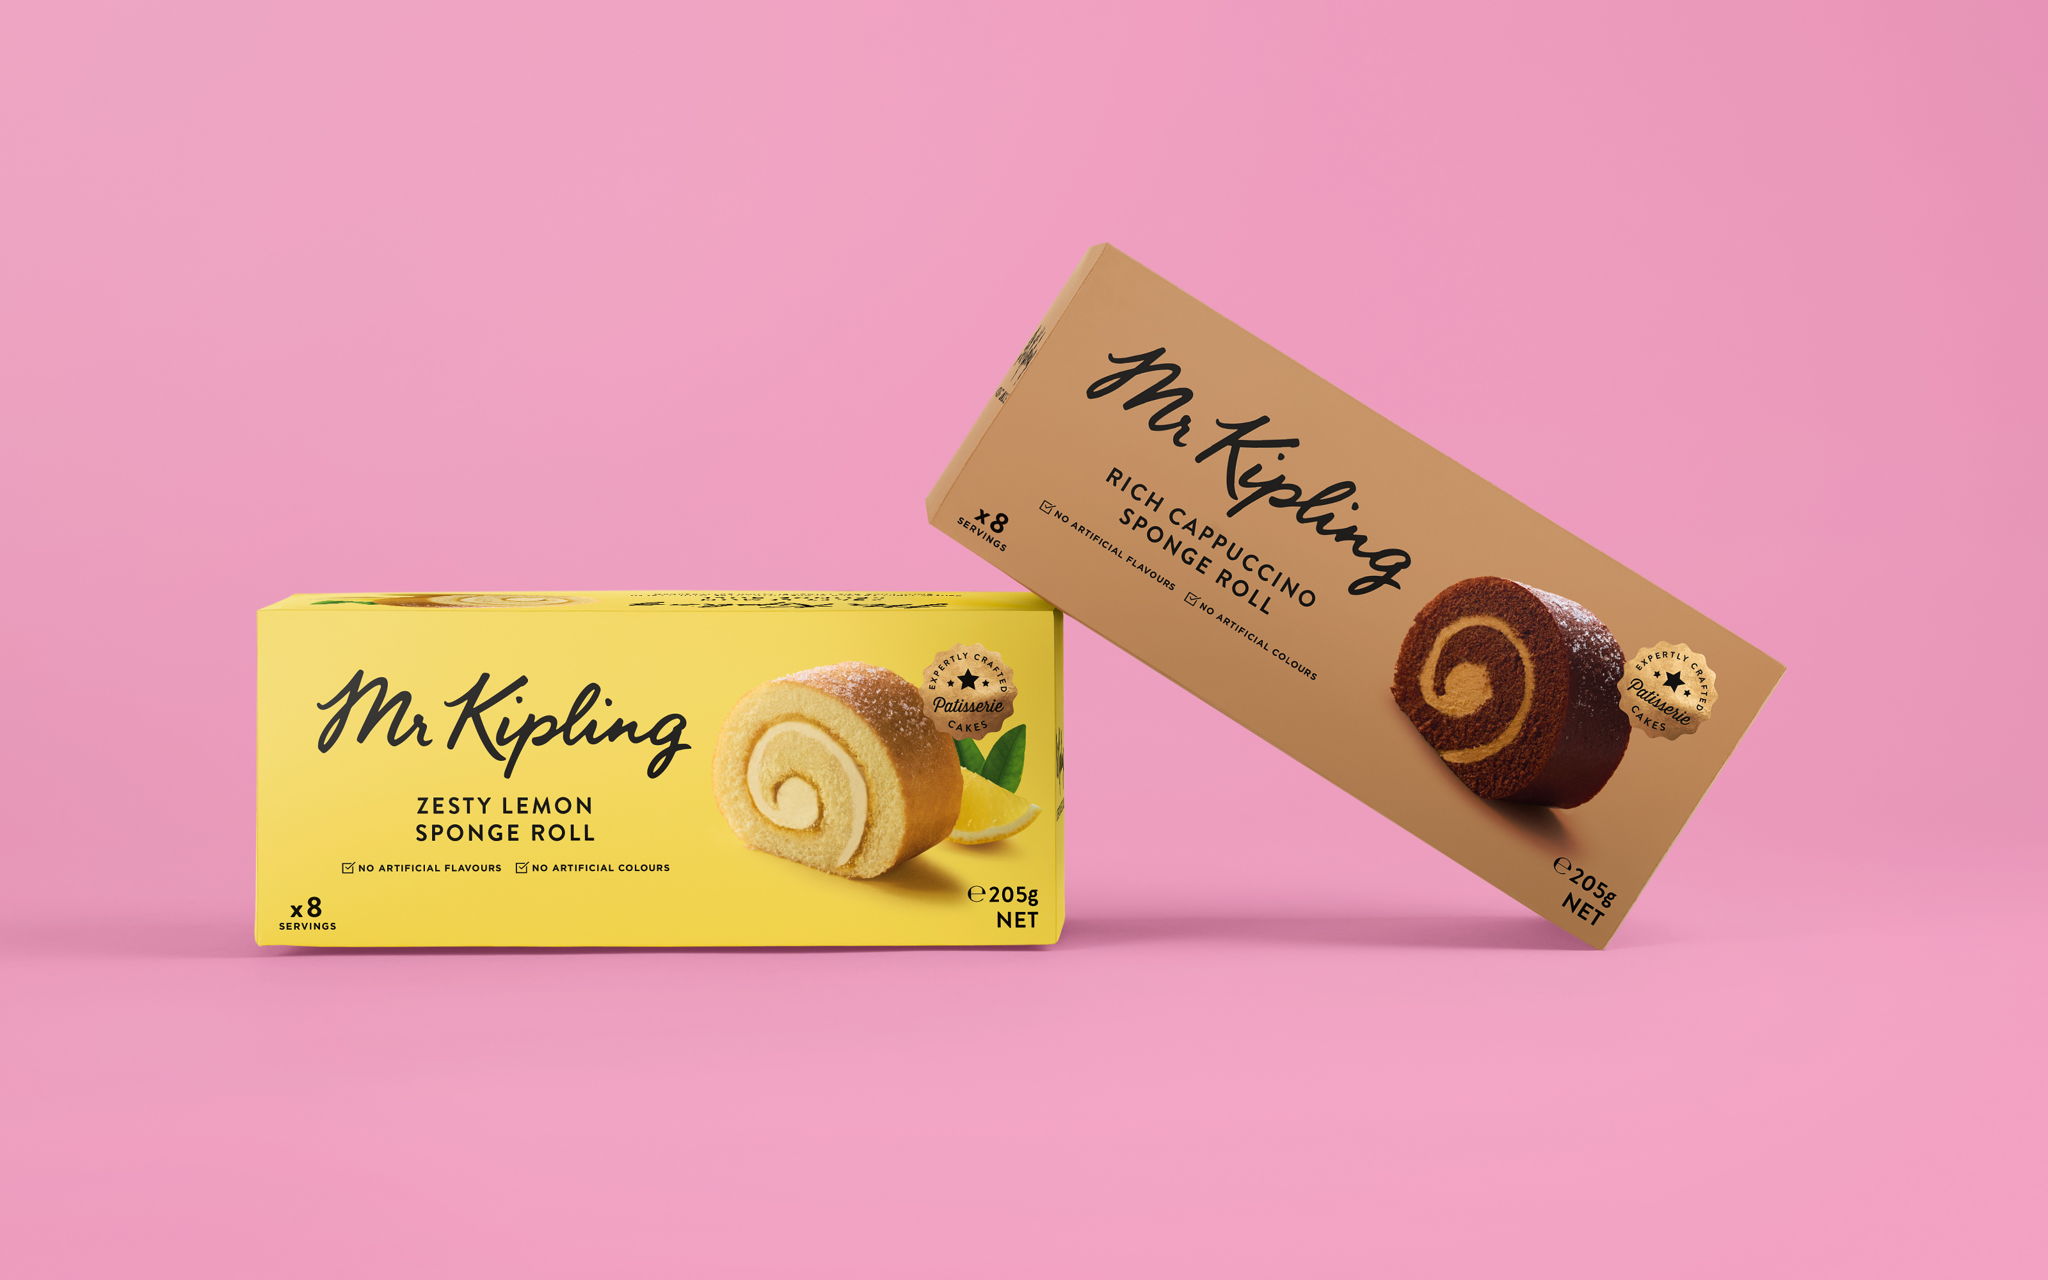 Редизайн, Дизайн упаковки, Robot Food, Mr Kipling Hits international Shelves With A Tantalising Redesign By Robot Food